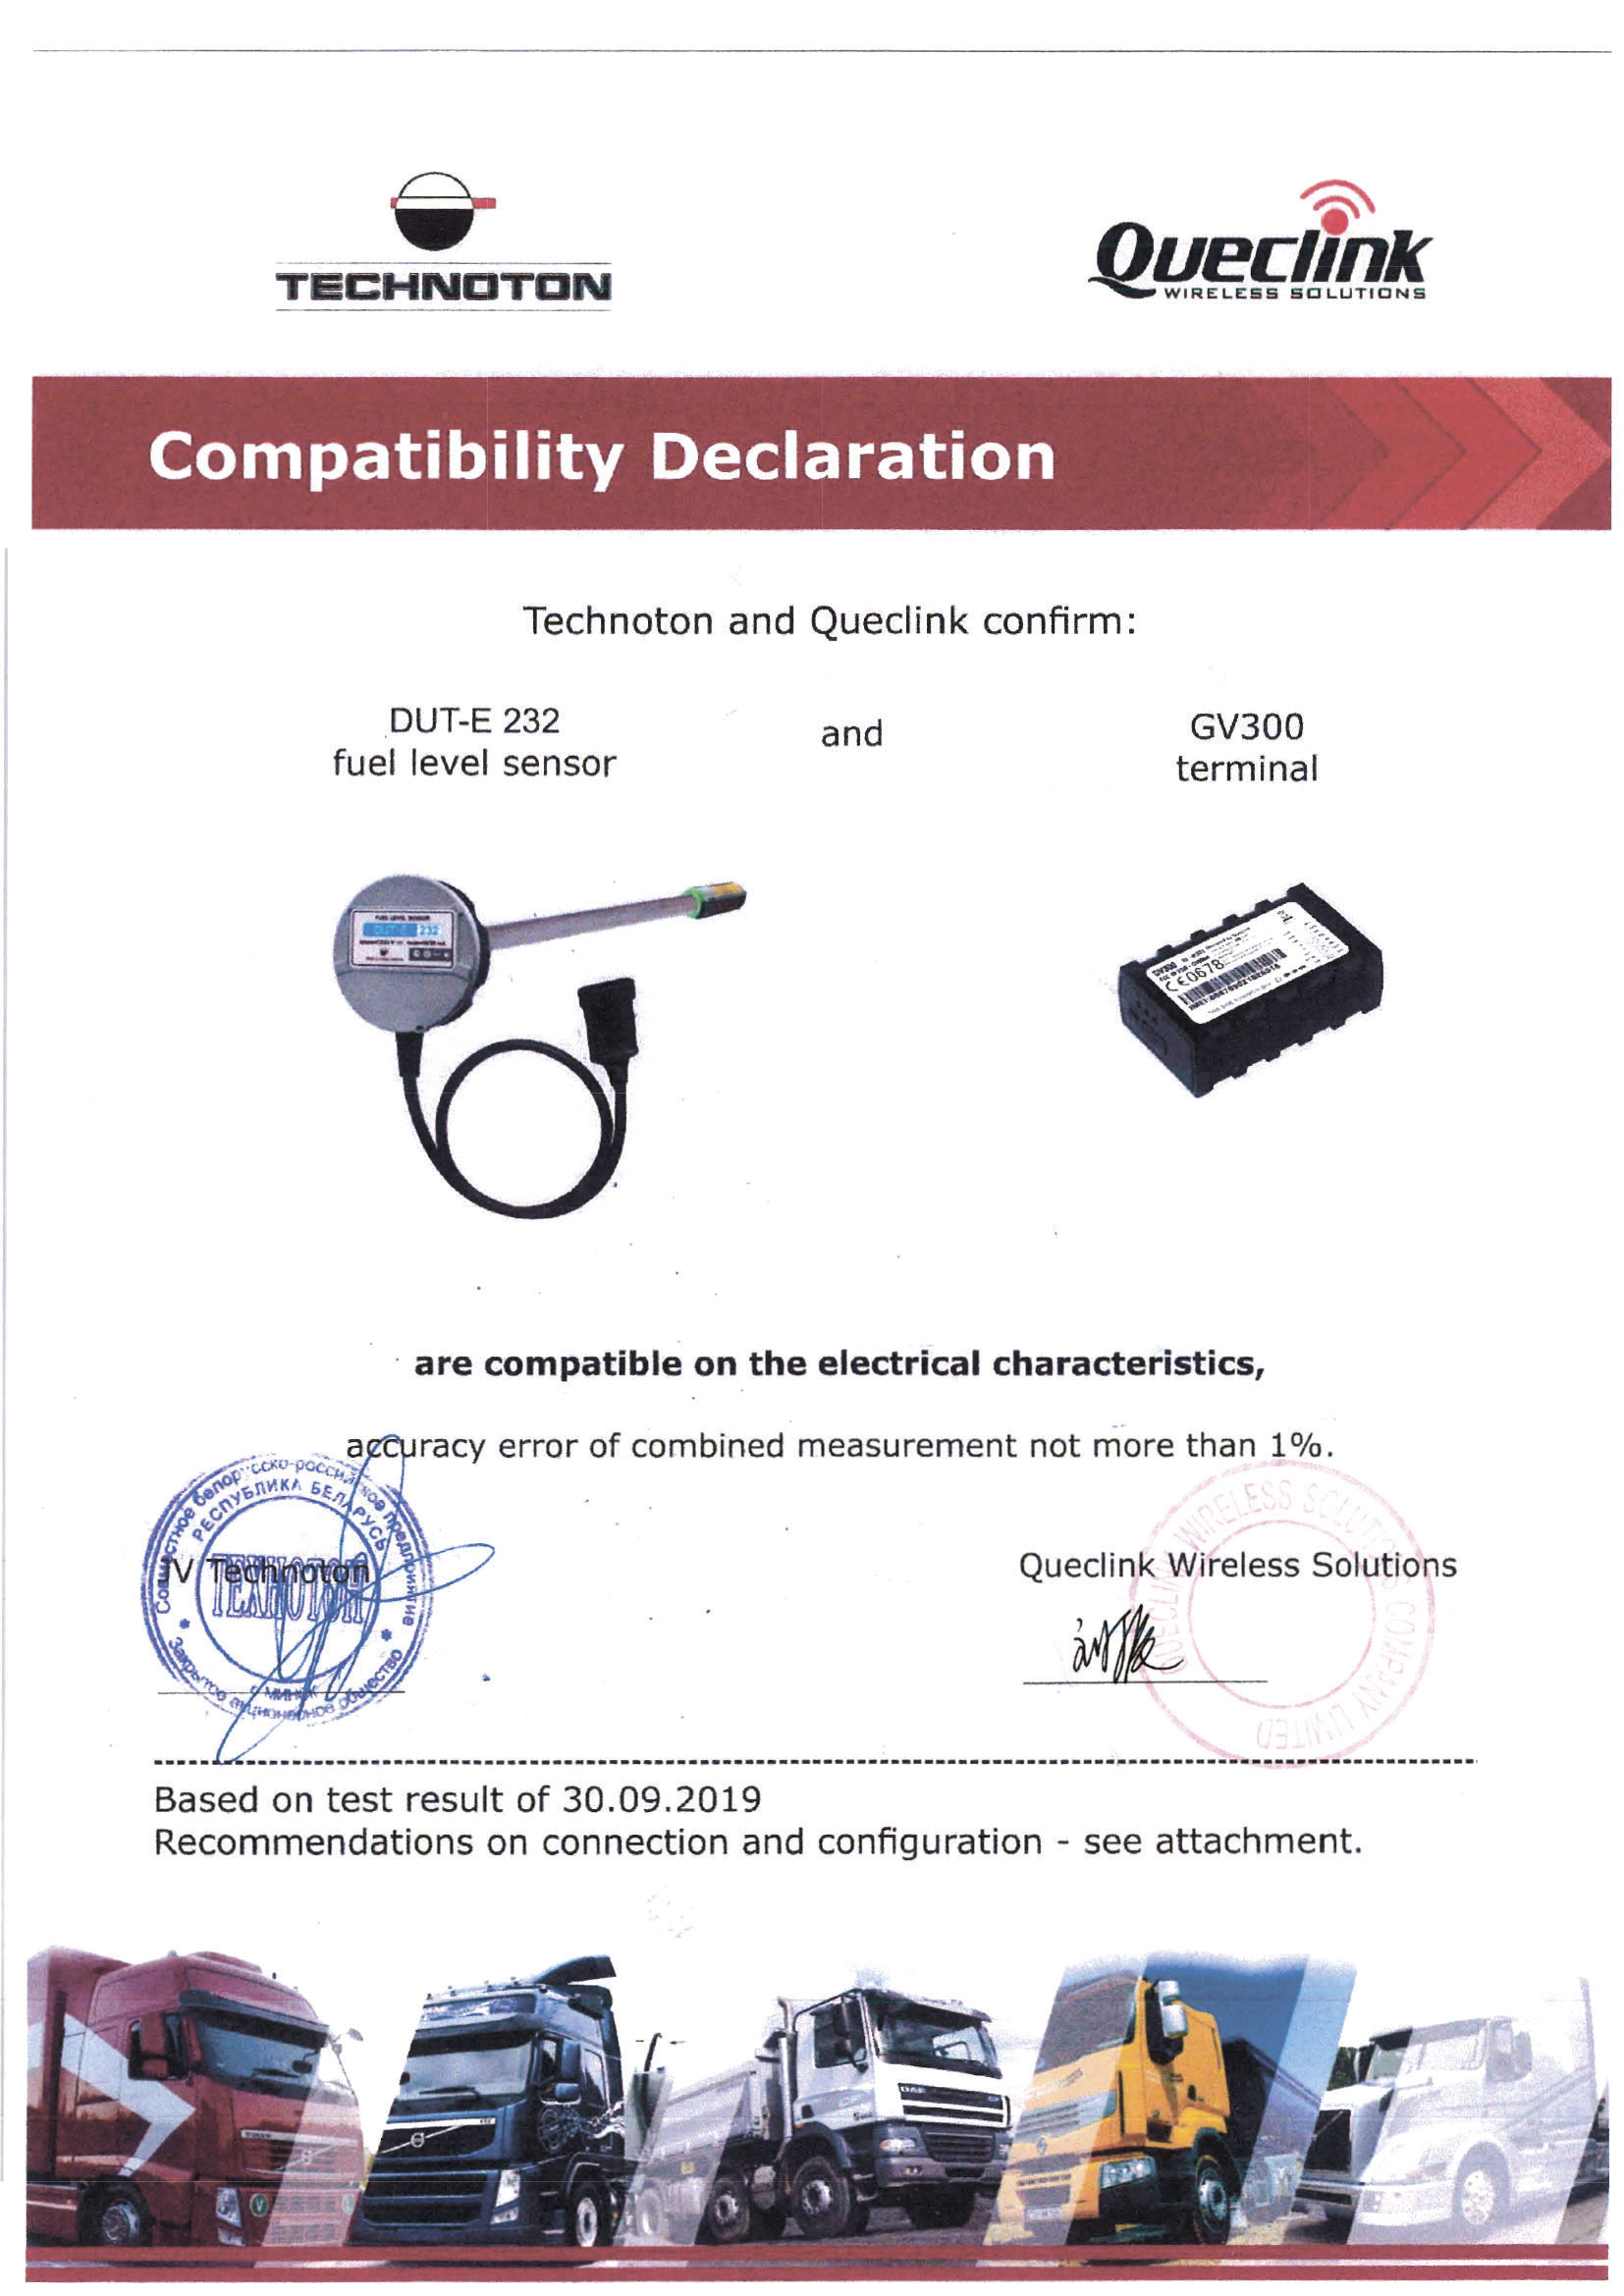 Compatibility Declaration of Technoton DUT-E 232 and Queclink GV300 tracker